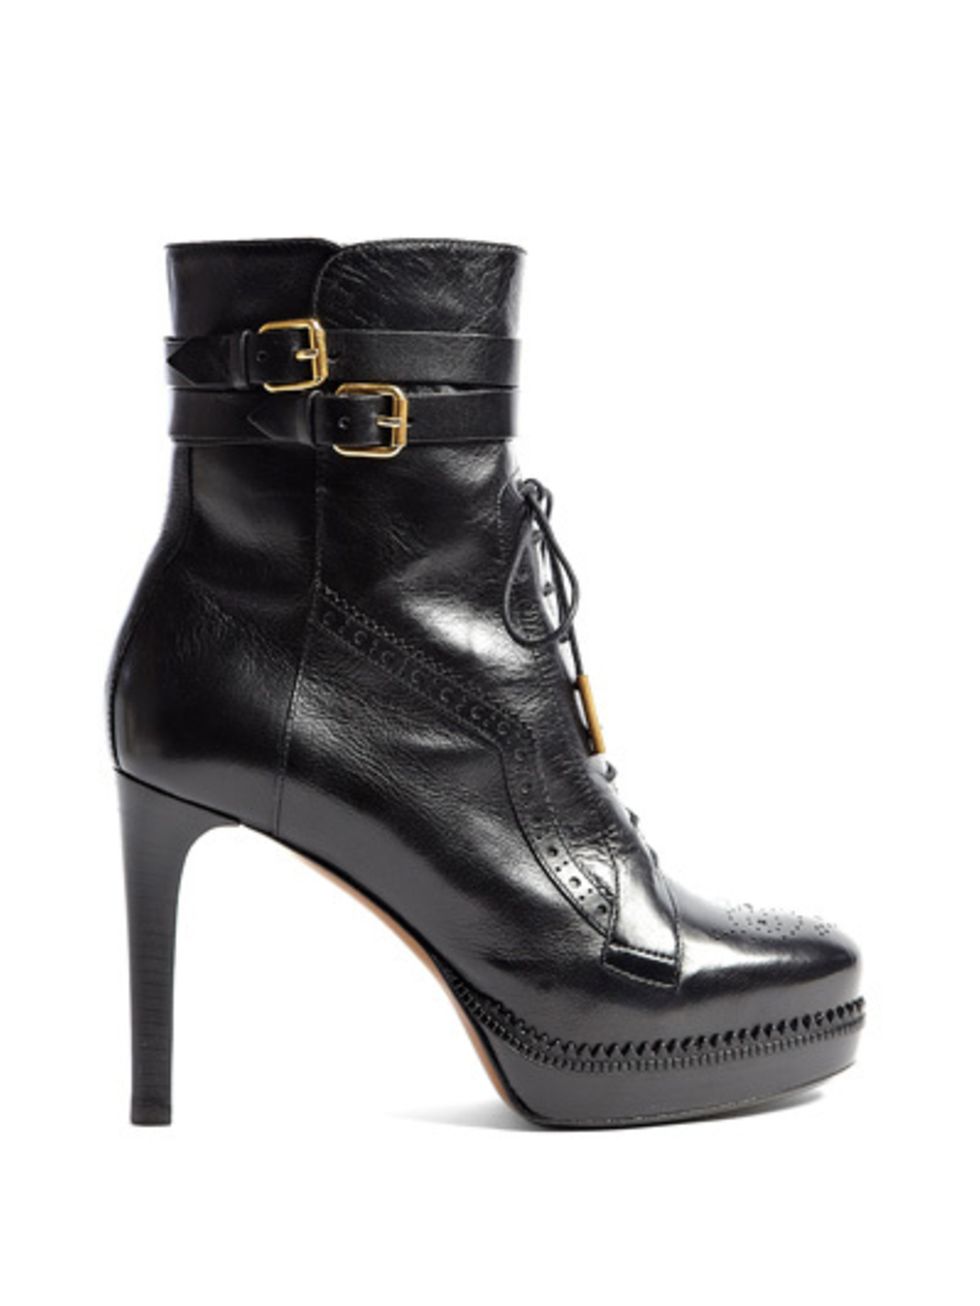 Footwear, Boot, Shoe, Fashion, Black, Leather, Fashion design, High heels, 